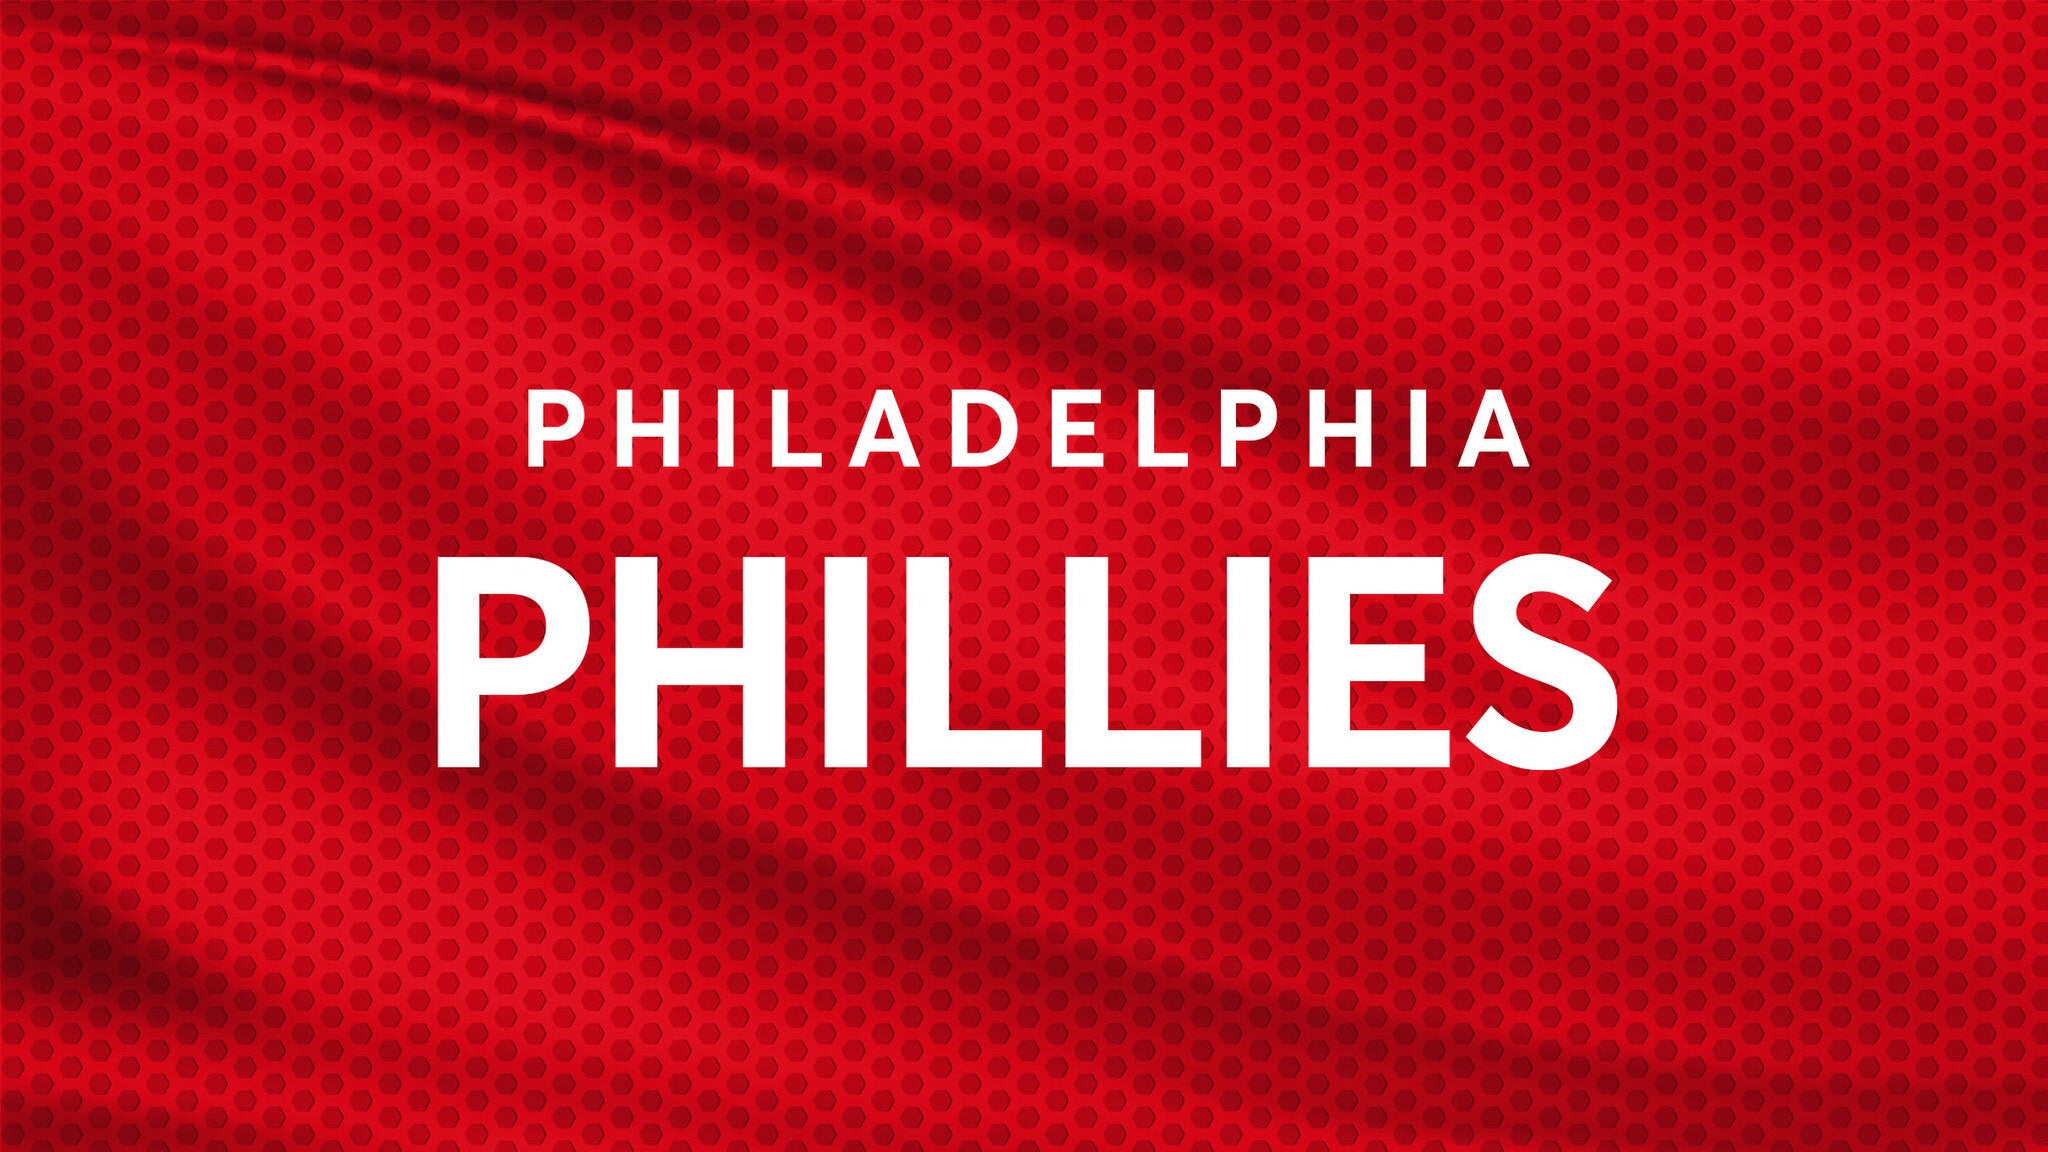 Philadelphia Phillies vs. St. Louis Cardinals